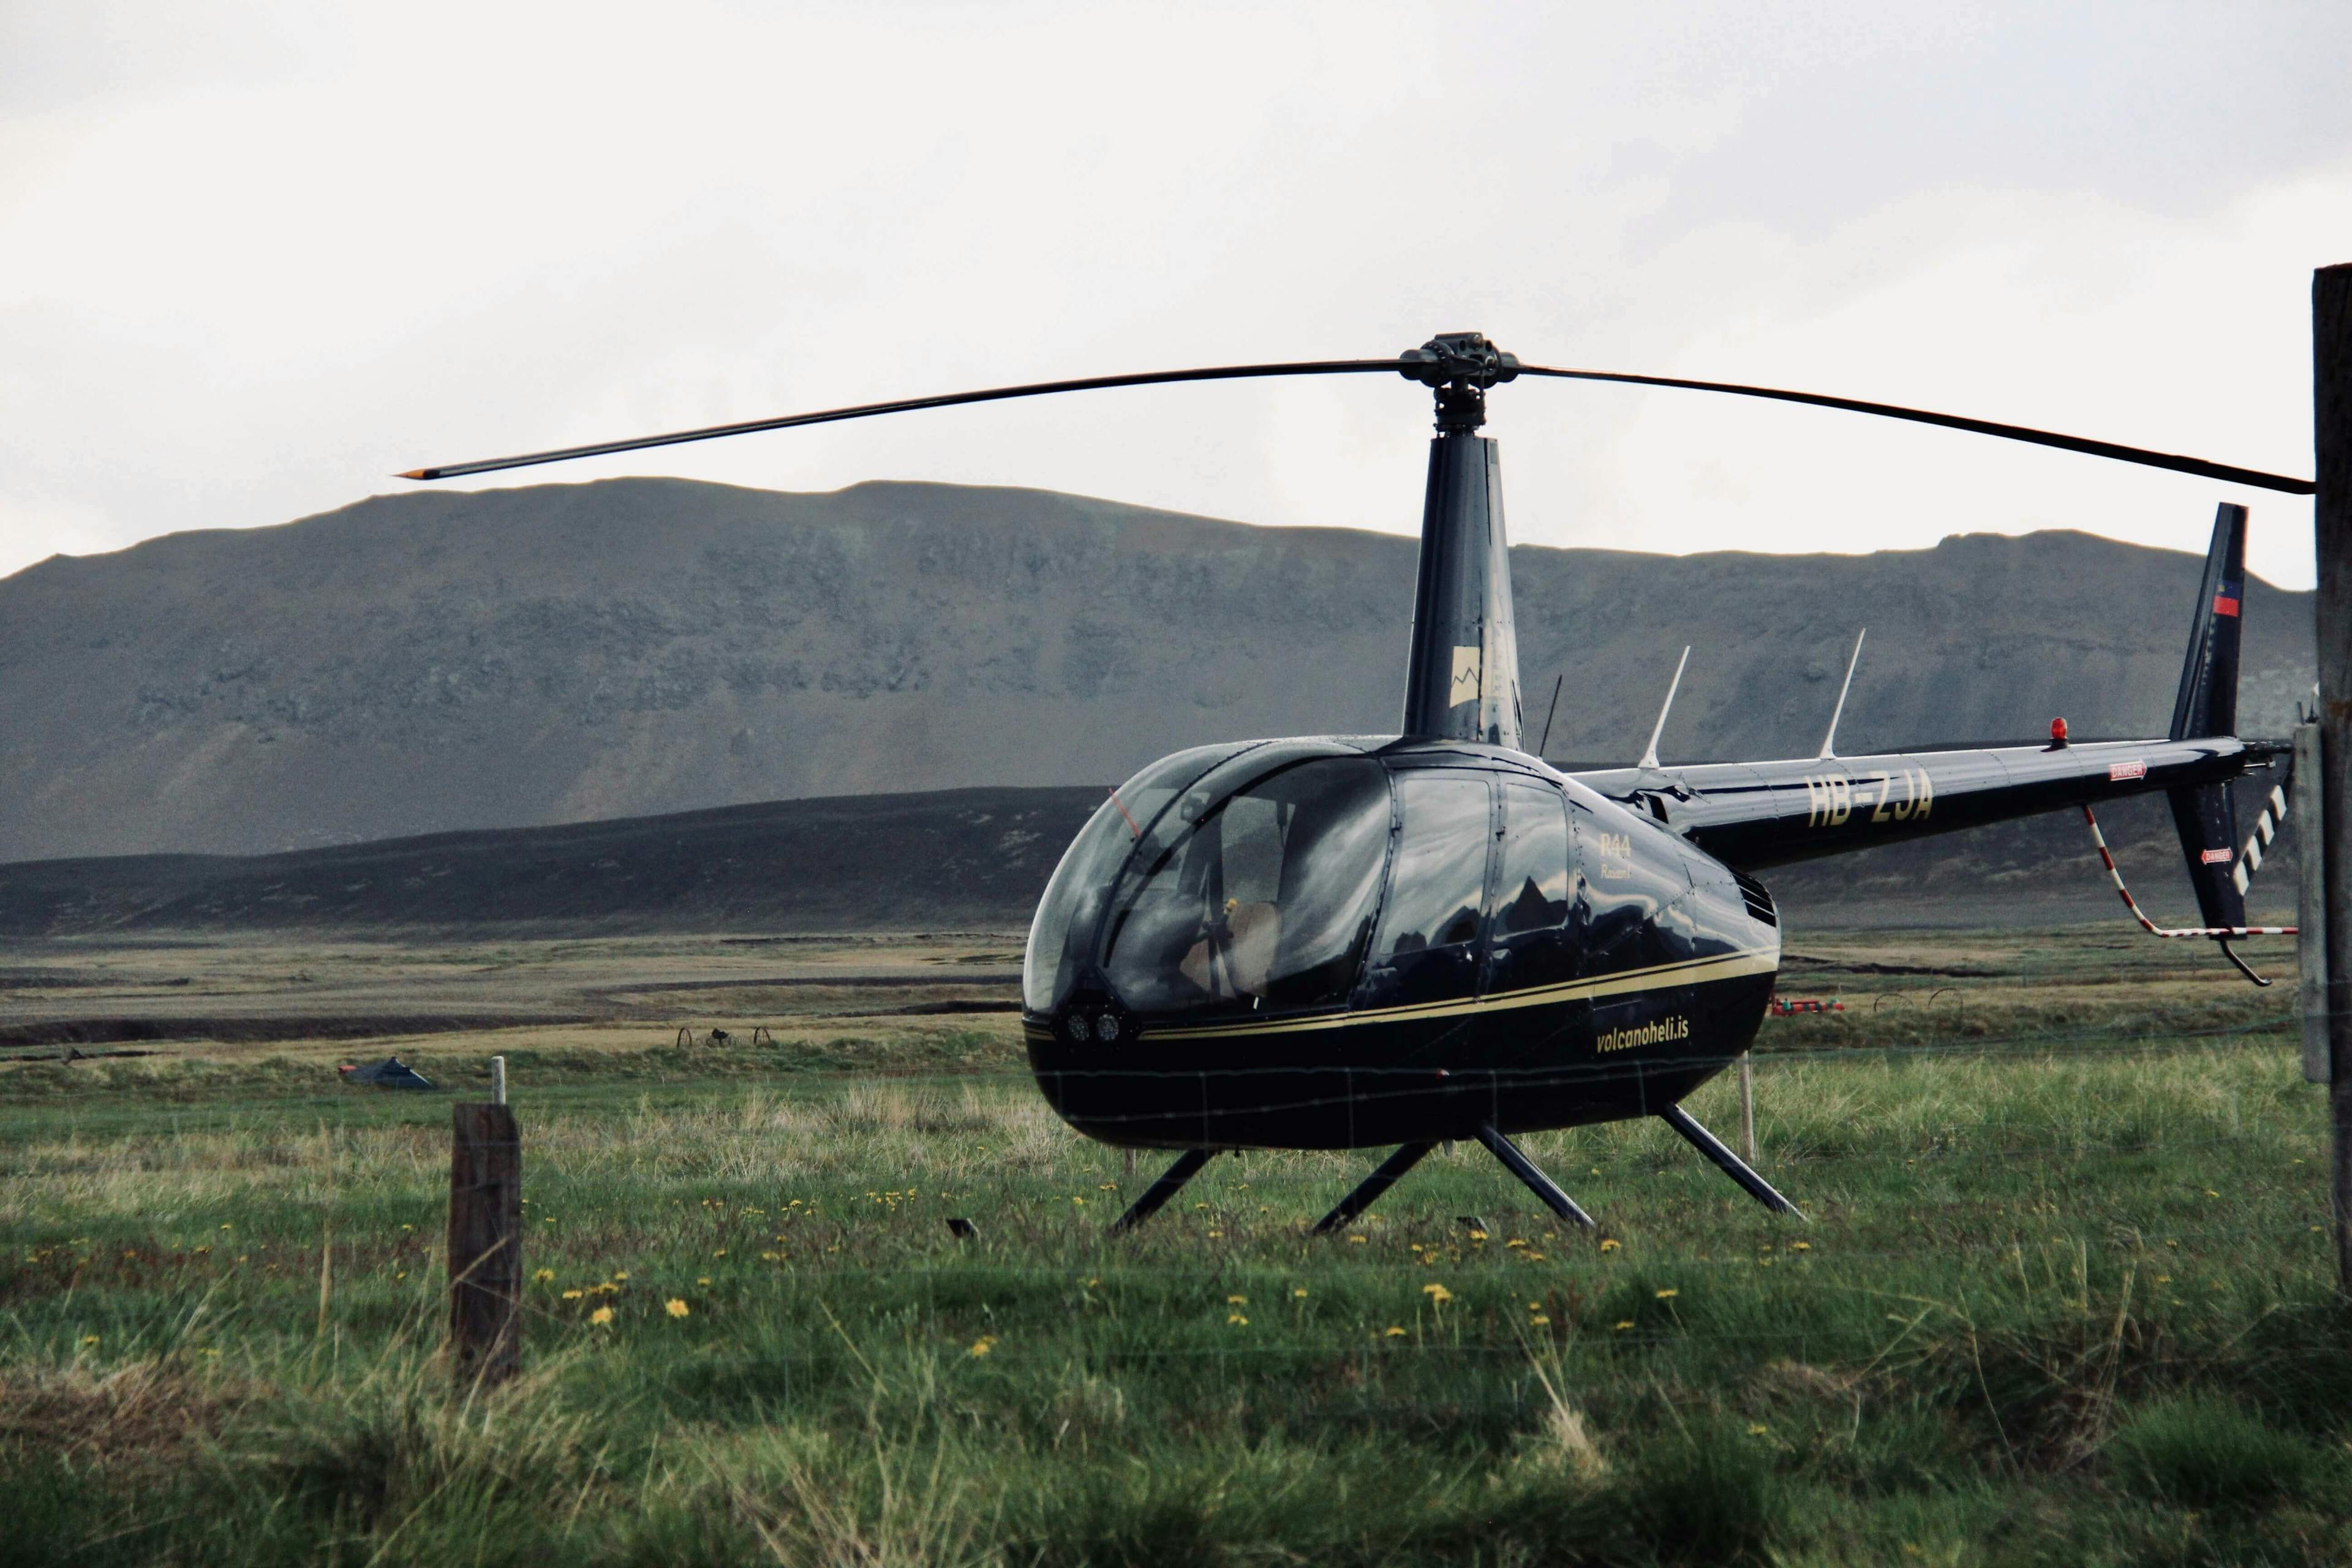 R44 Helicopter in open field